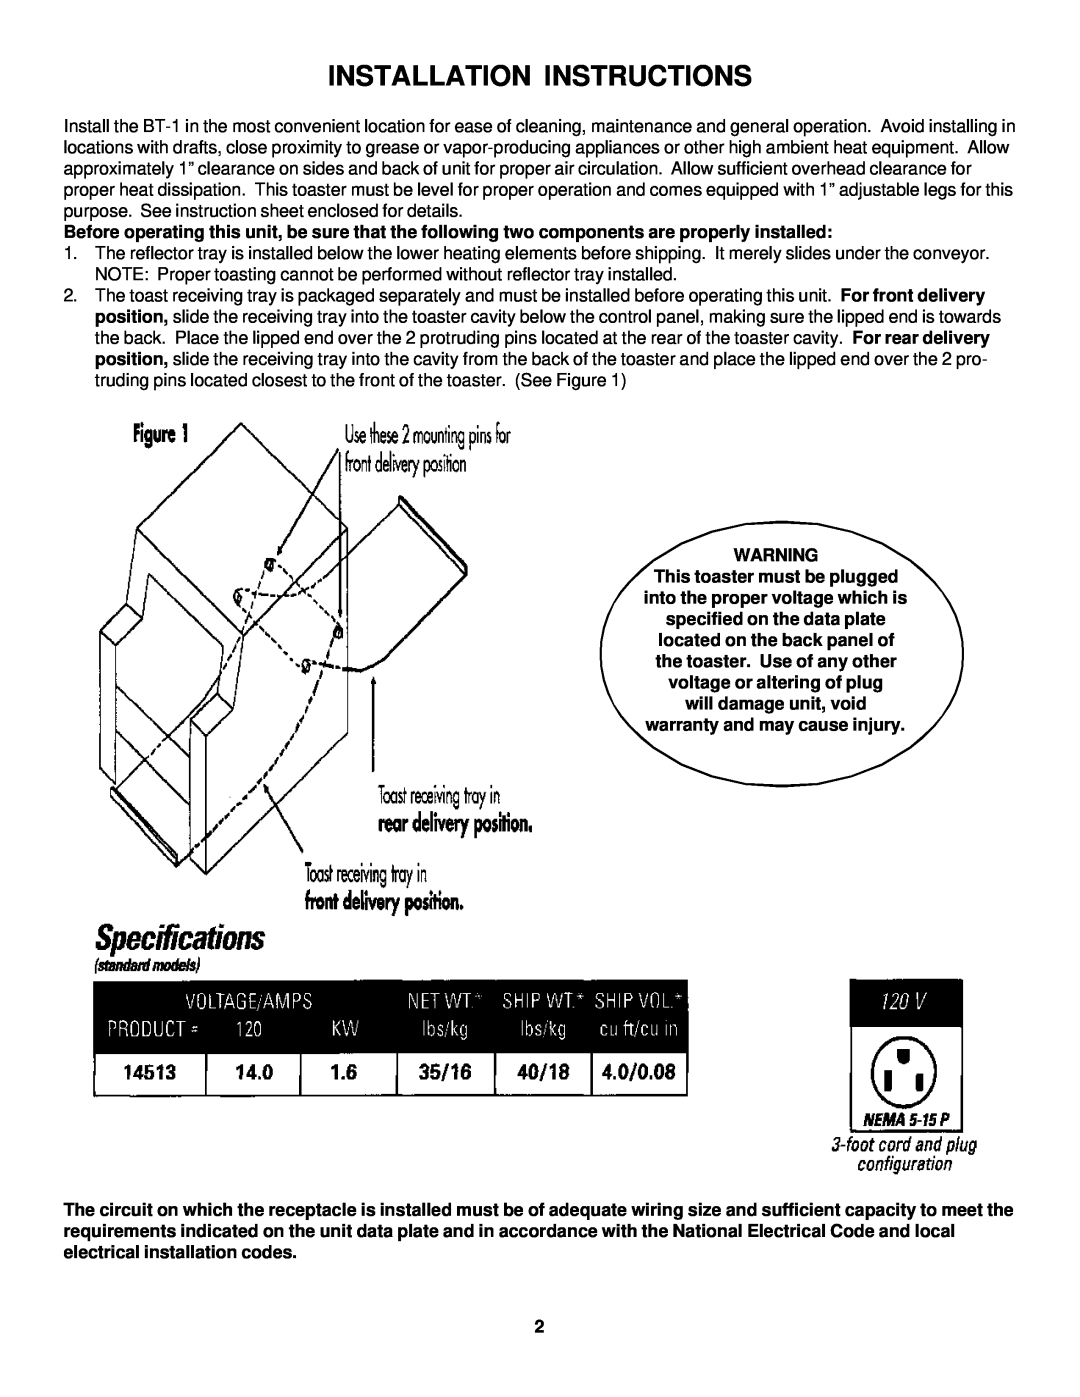 Merco Savory BT-1 operation manual Installation Instructions 